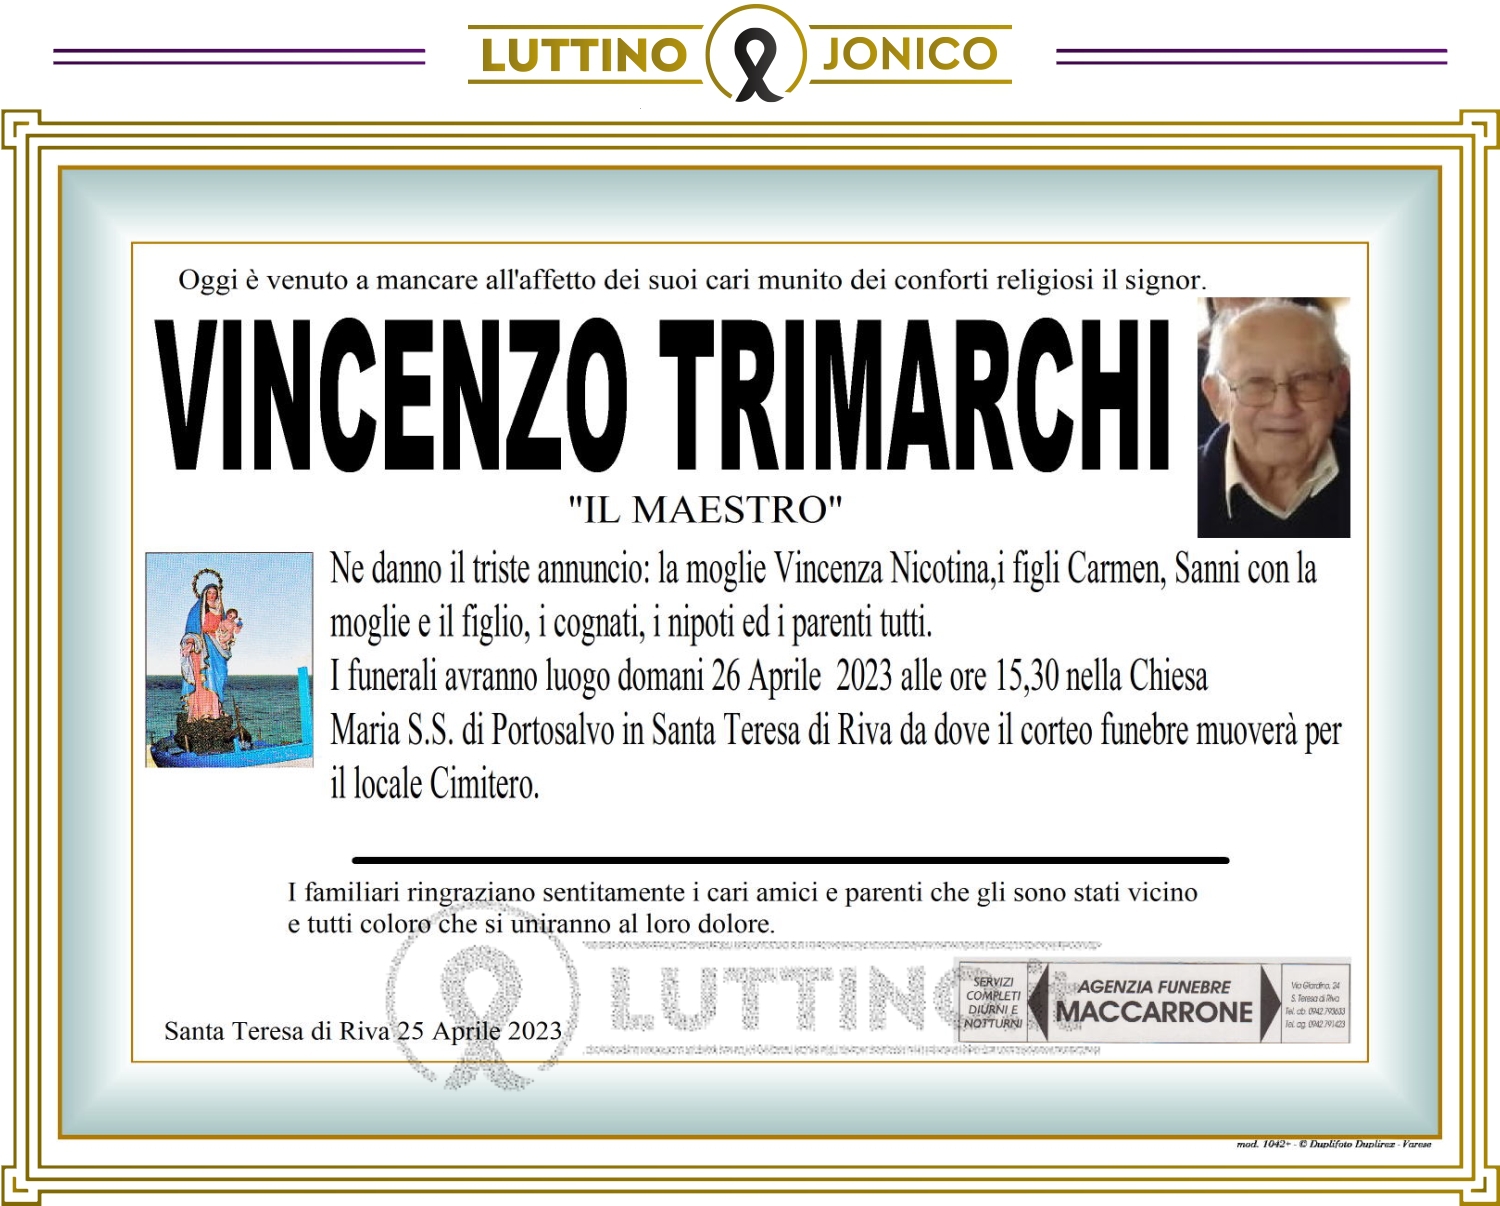 Vincenzo Trimarchi